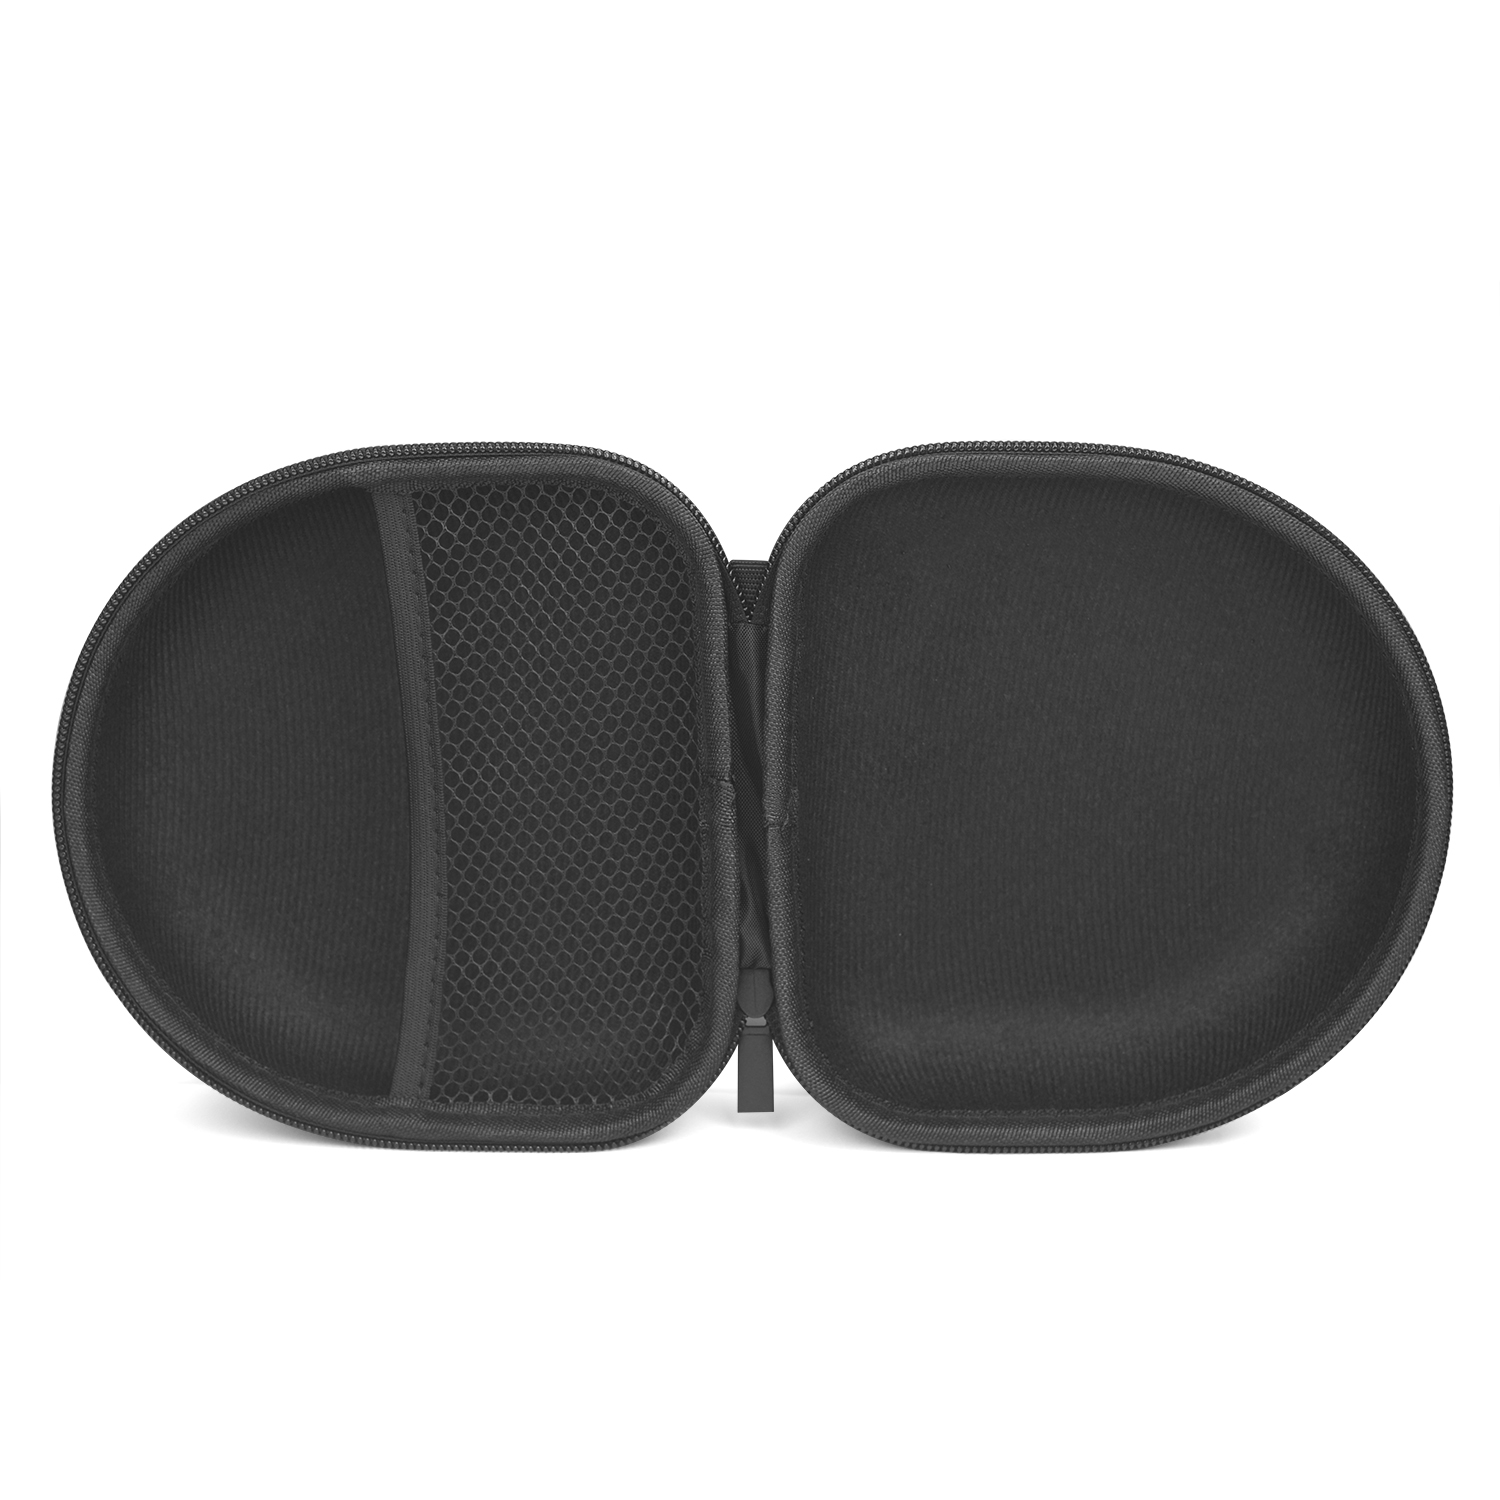 Bakeey-Headphone-Storage-Bag-Dustproof-Portable-Hard-Carrying-Case-Wireless-Head-Mounted-Headset-Pro-1800702-3